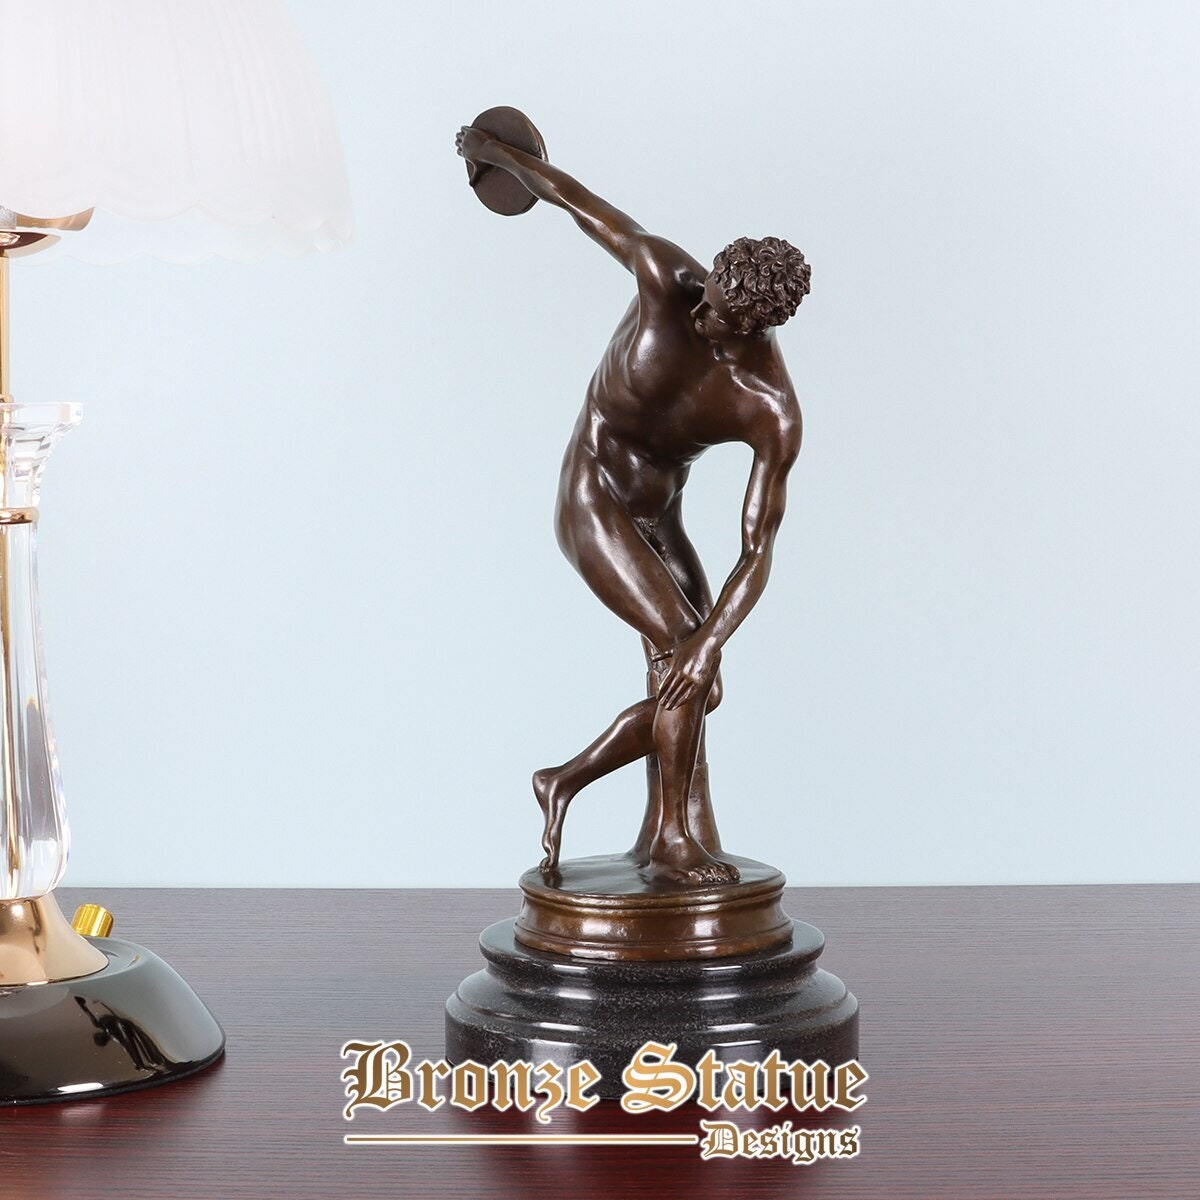 Bronze classic discus thrower statue discobolos sculpture by greek famous myron replica antique figurine art home decor